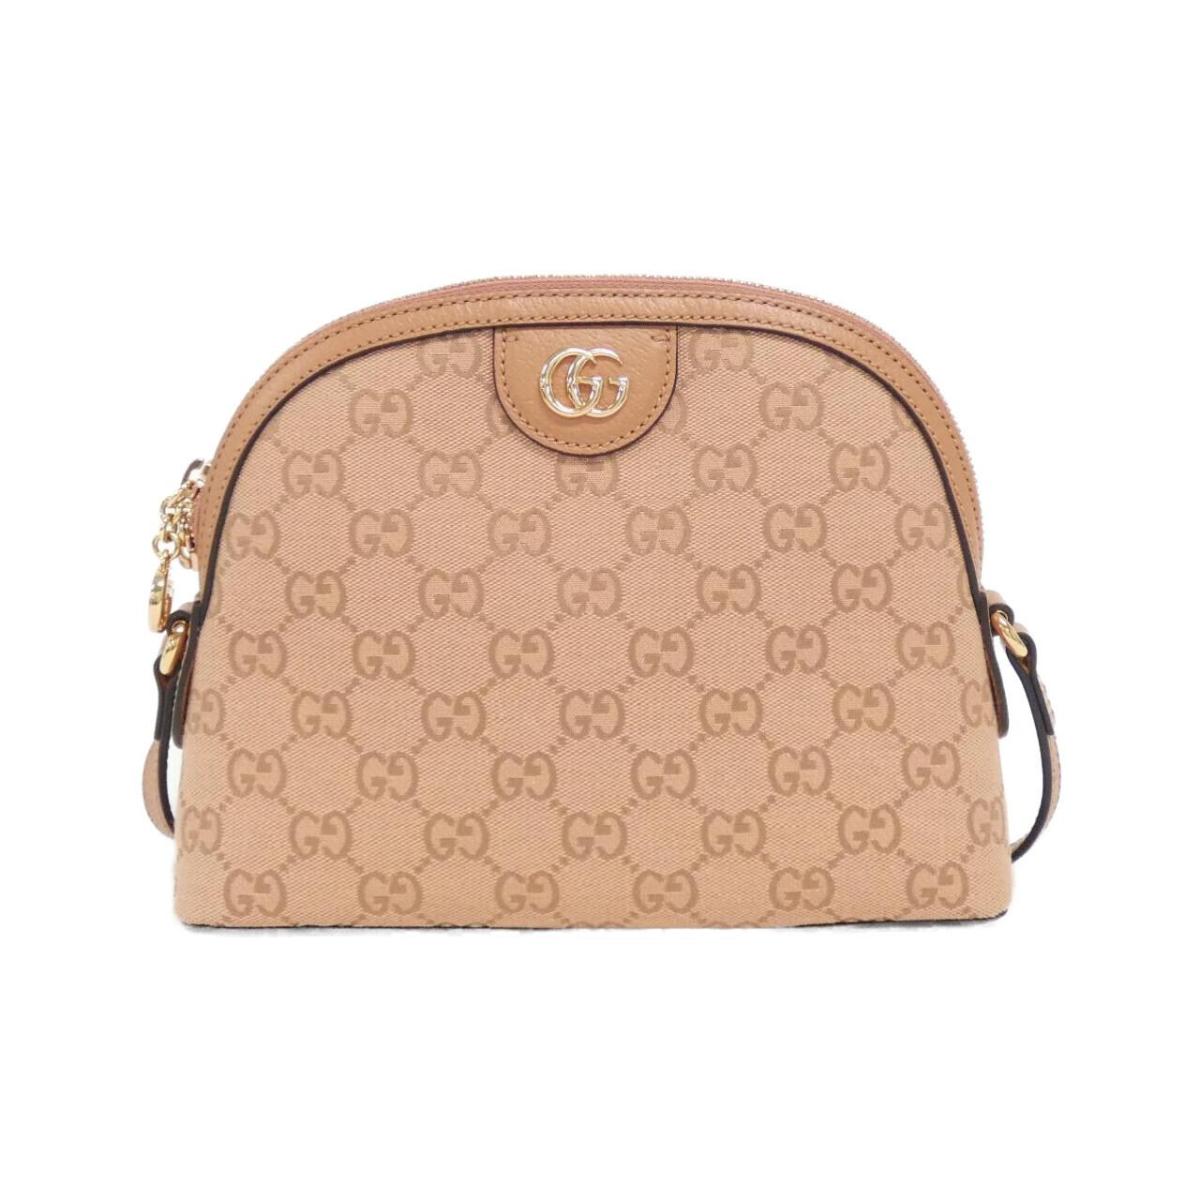 Gucci OPHIDHIA 499621 FACC5 Shoulder Bag